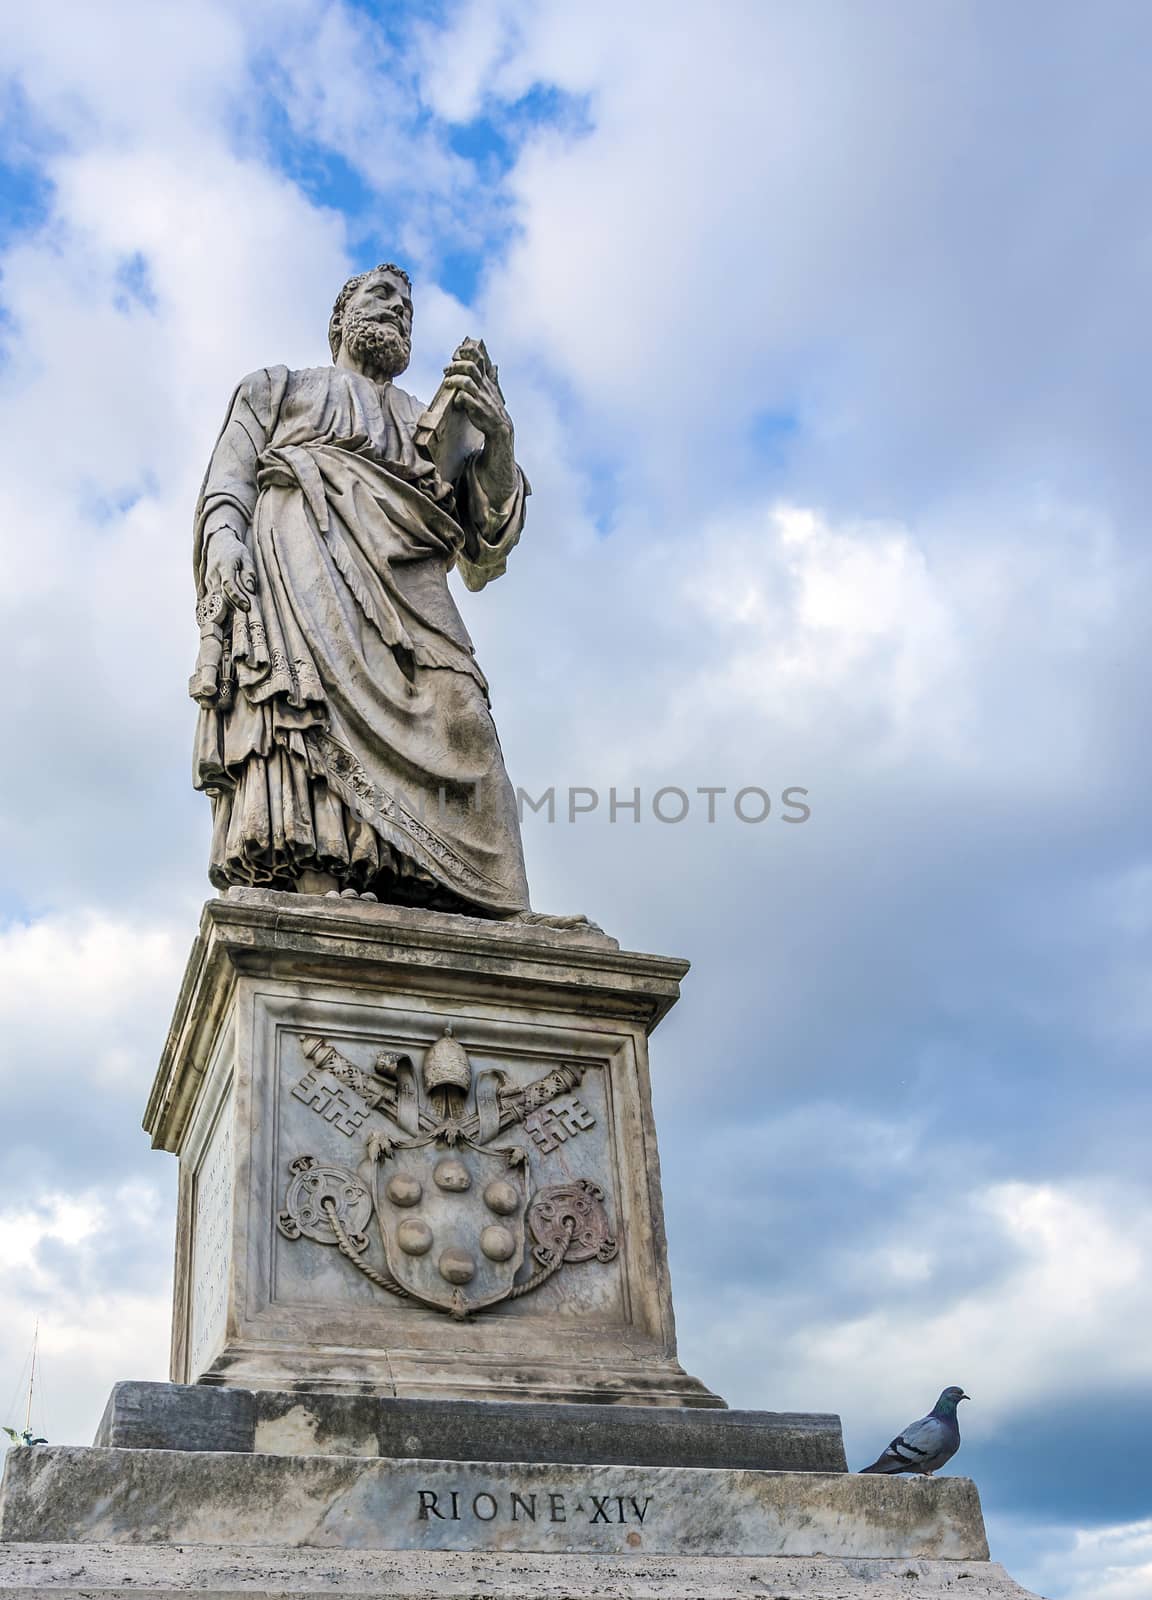 Statue of Apostle saint Peter by rarrarorro